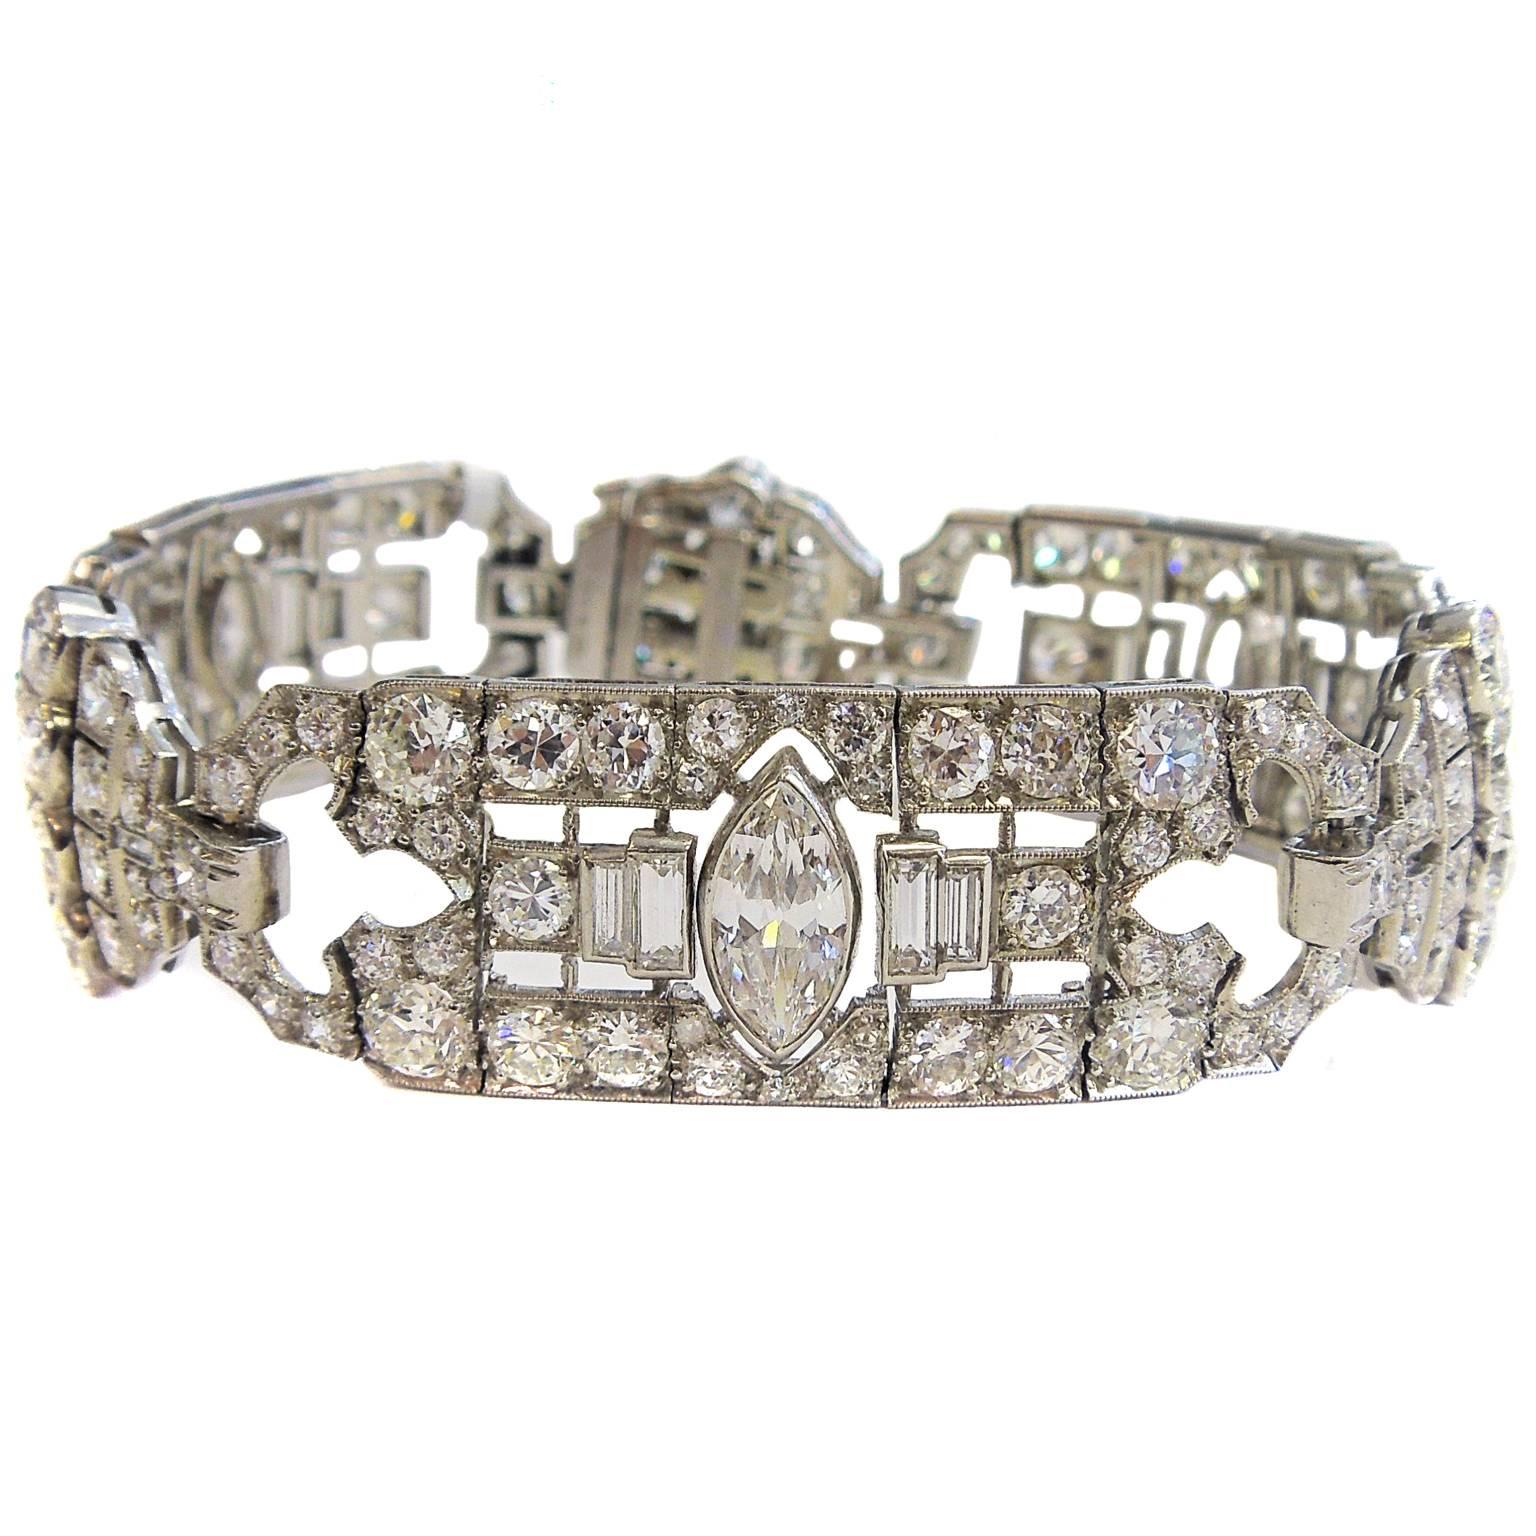 Platinum Art Deco Bracelet with Marquis and Round Diamonds